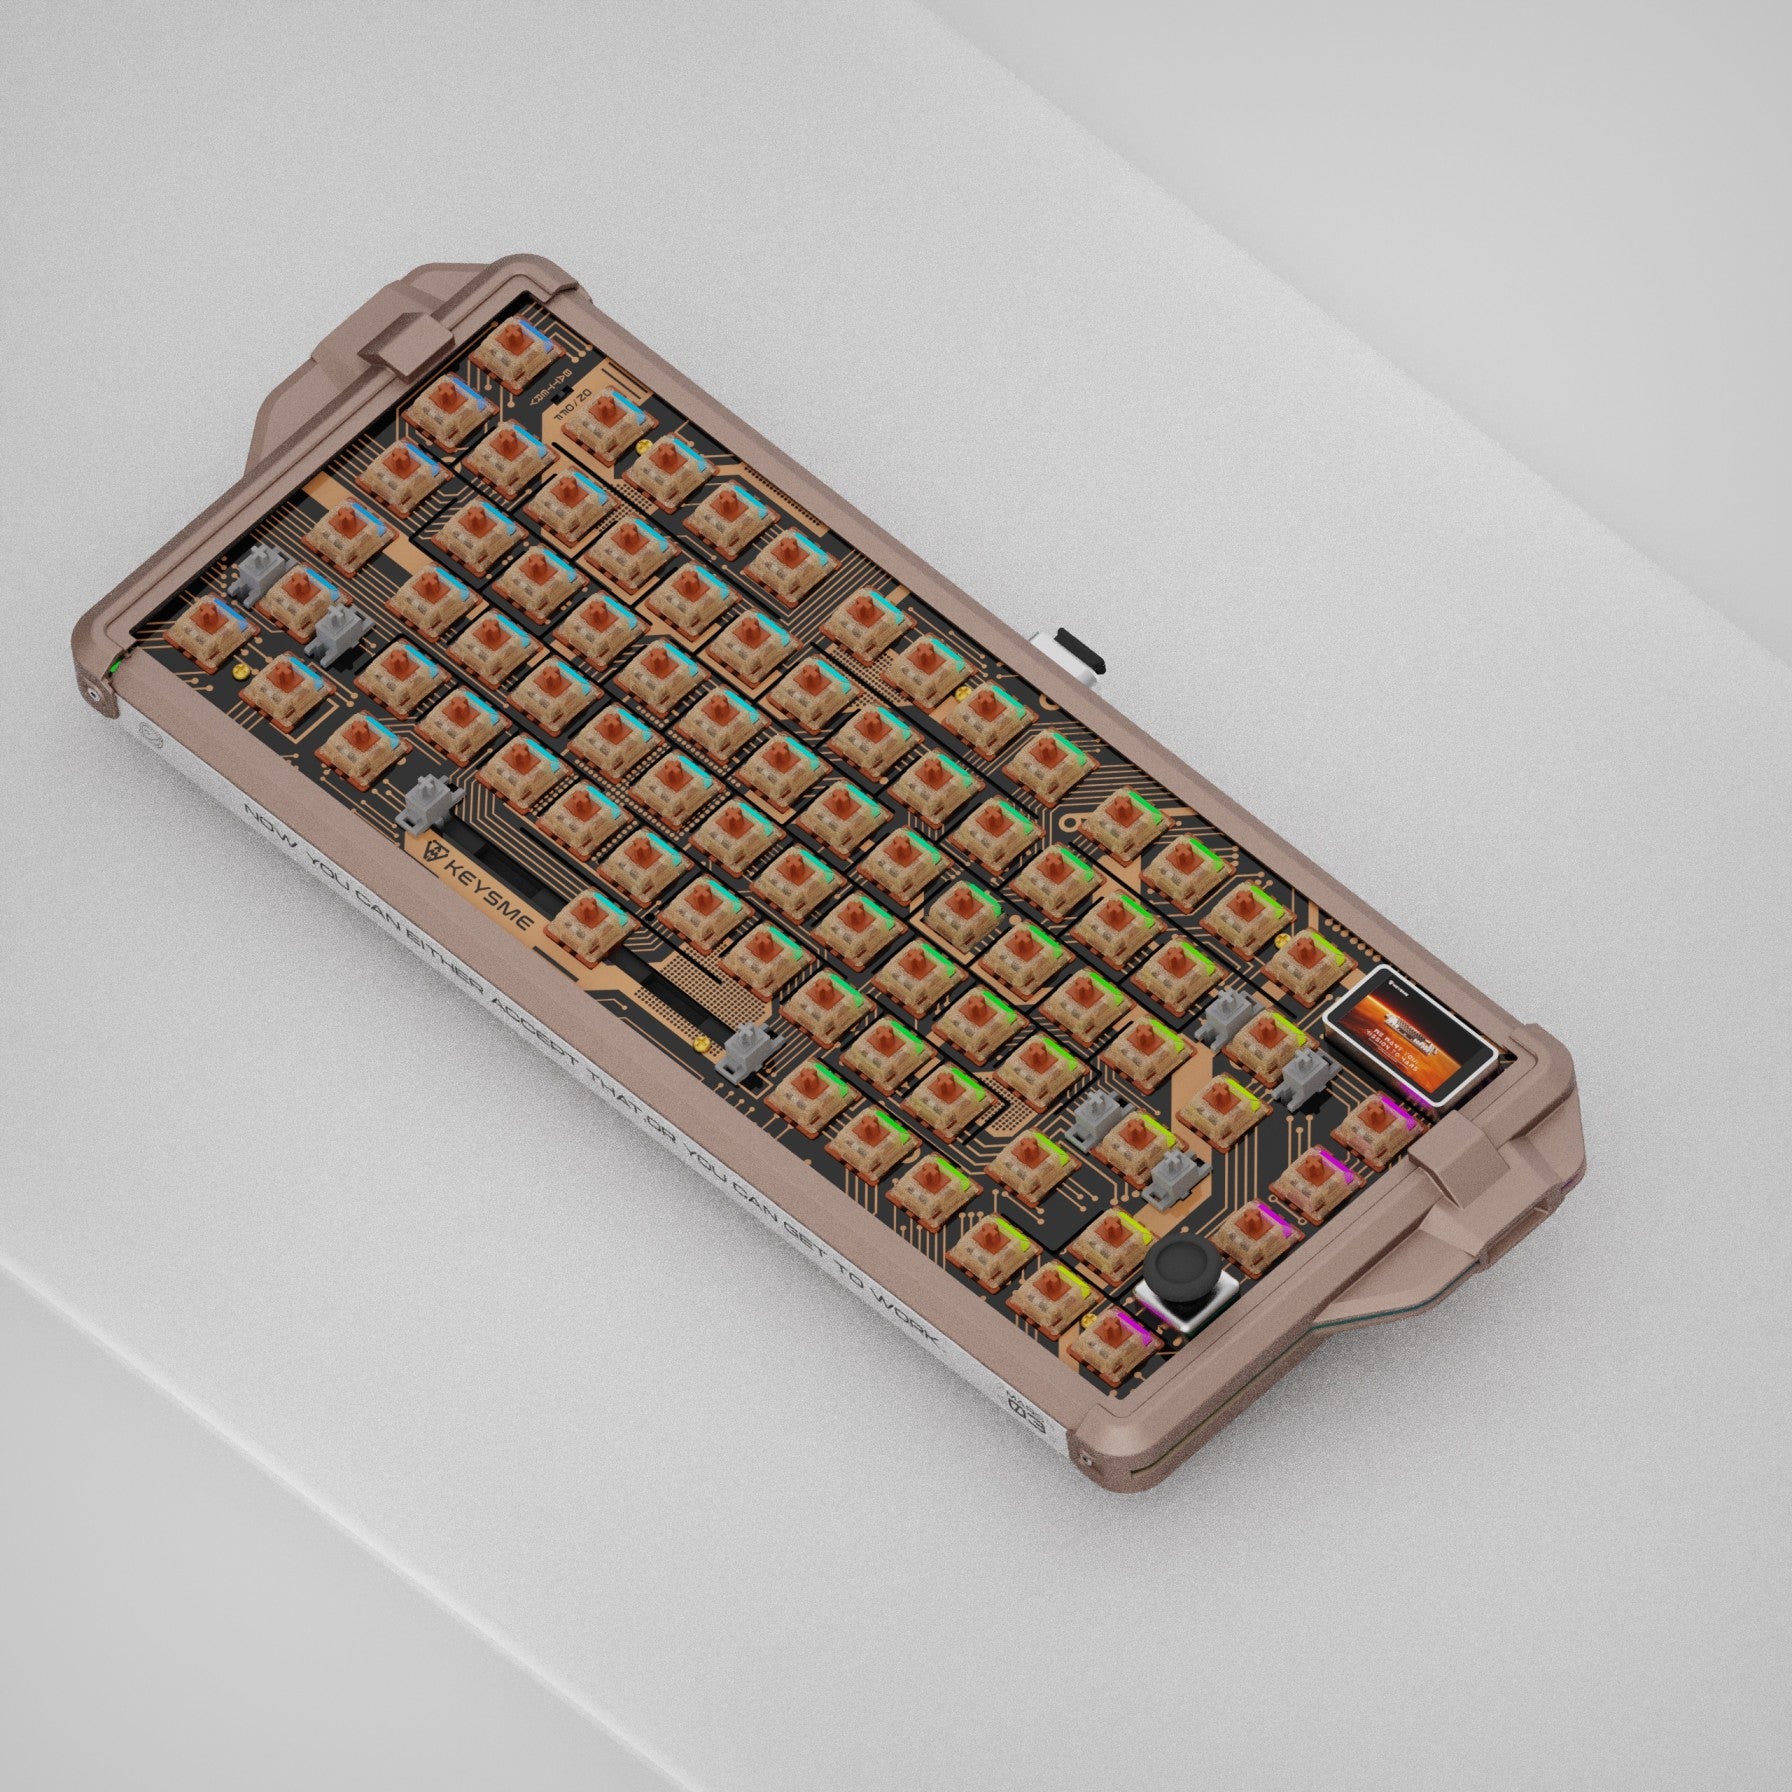 KeysMe Mars 03 spaceship mechanical keyboard hot-swappable Gateron Mars switch for Windows Mac Mars Sand color